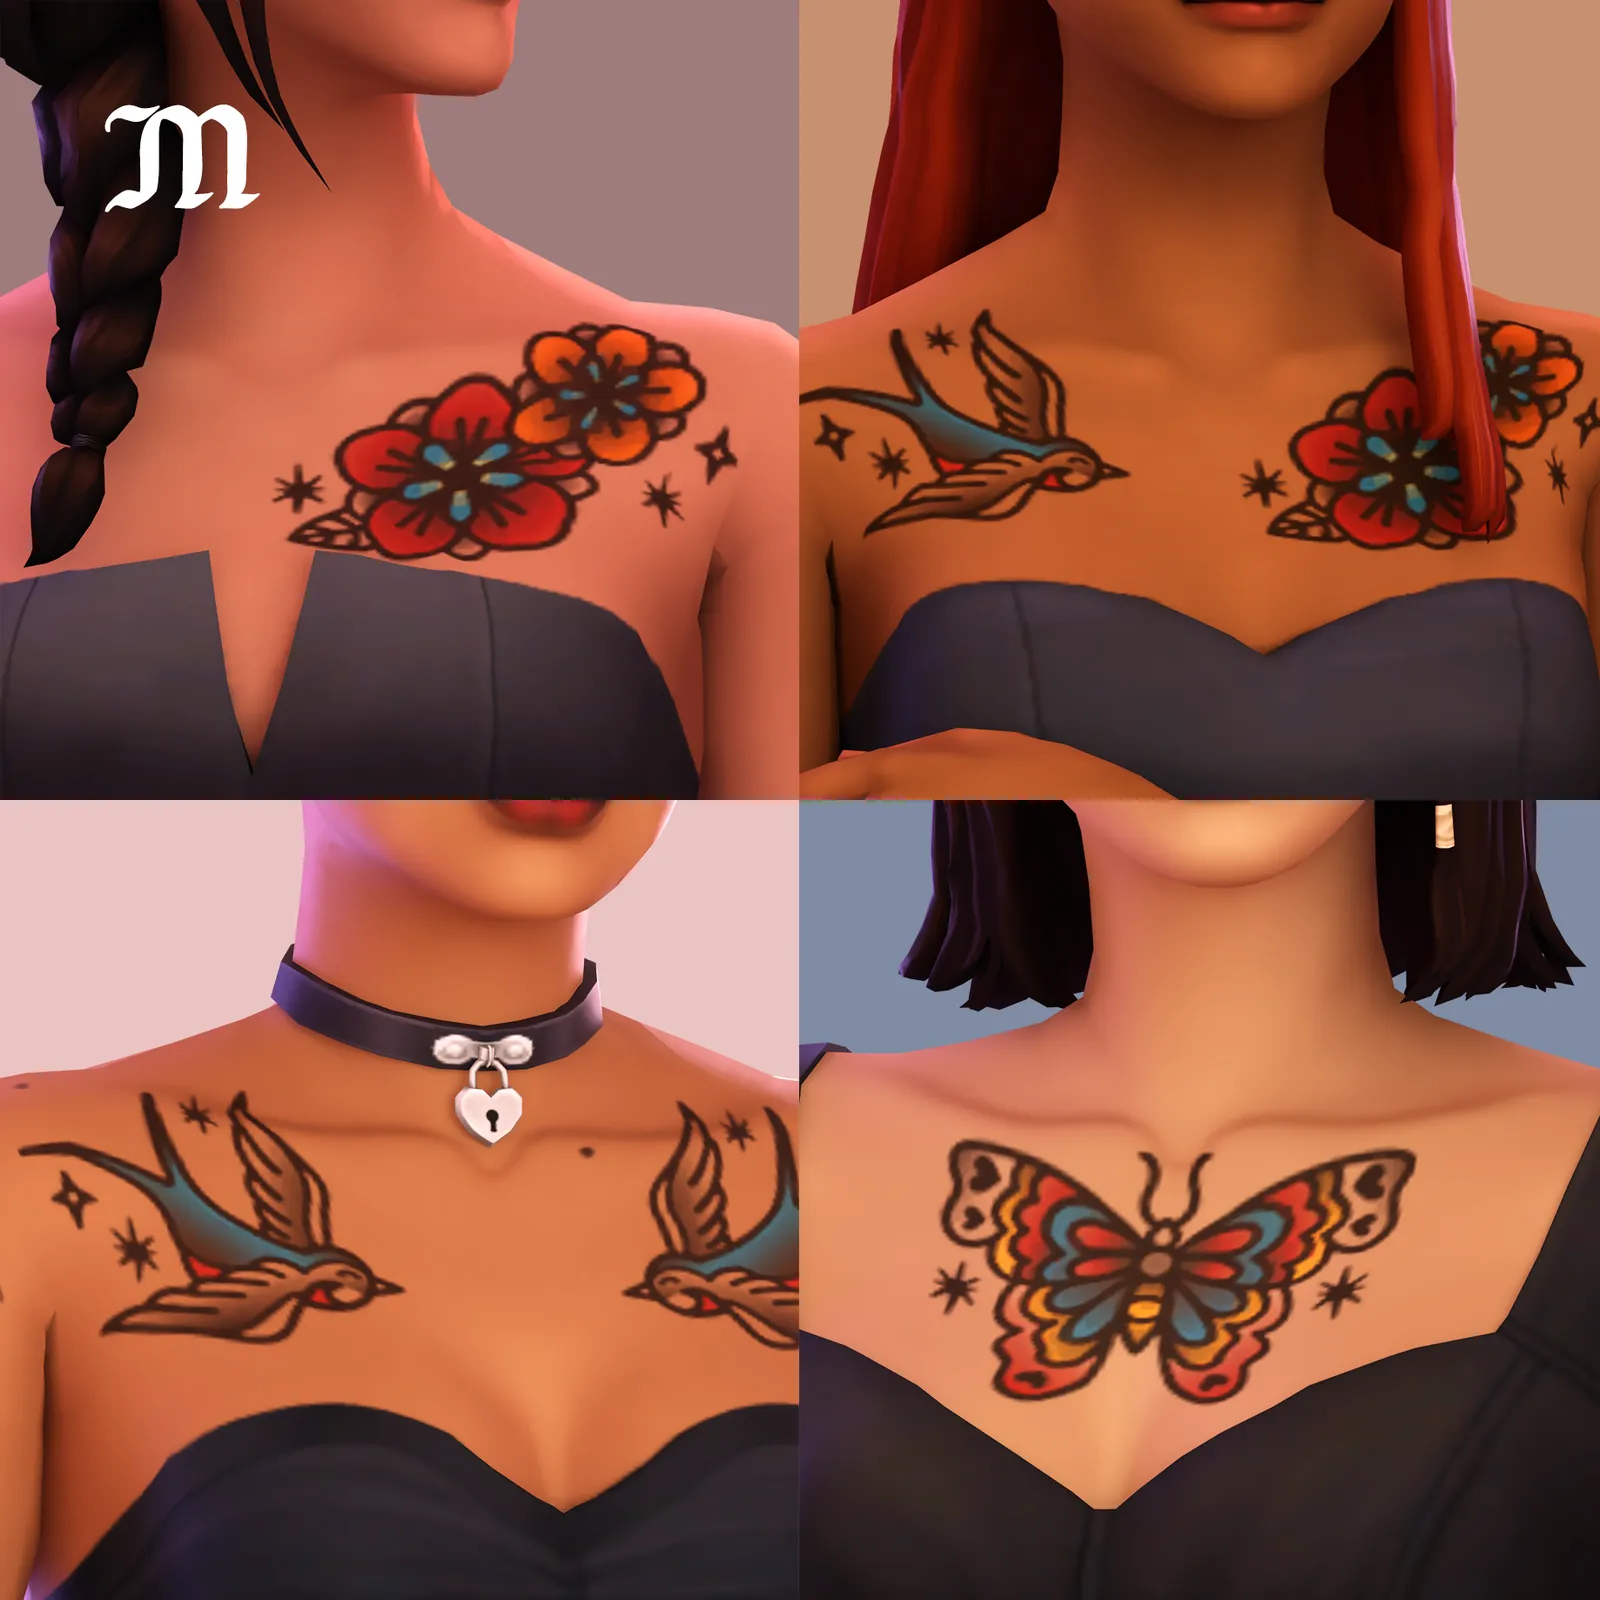 More Random Tattoos - Maxis Match chest tattoos